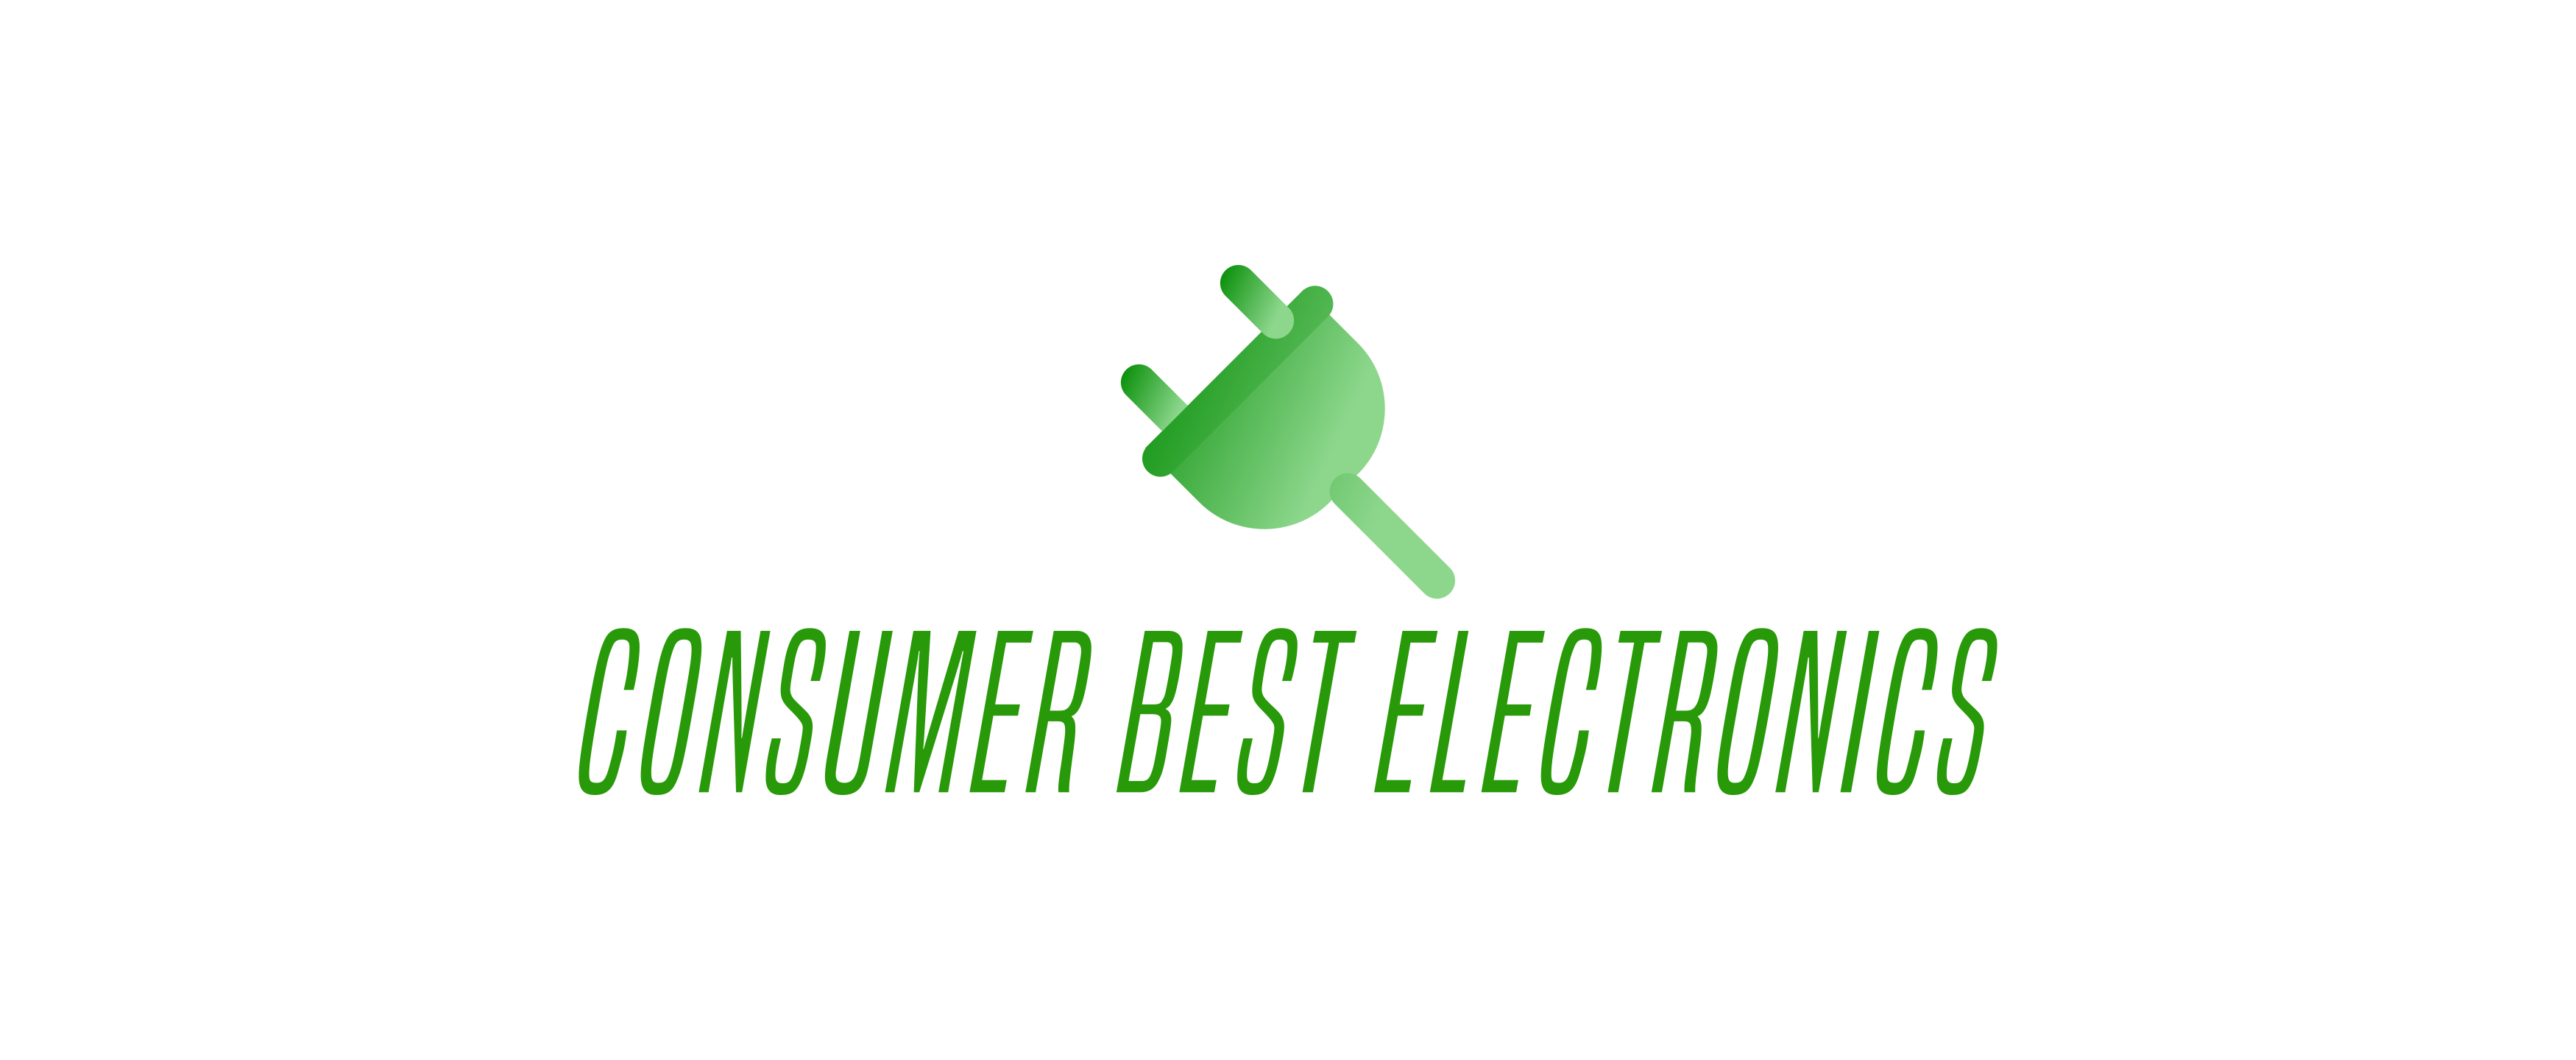 Consumer Best Electronics